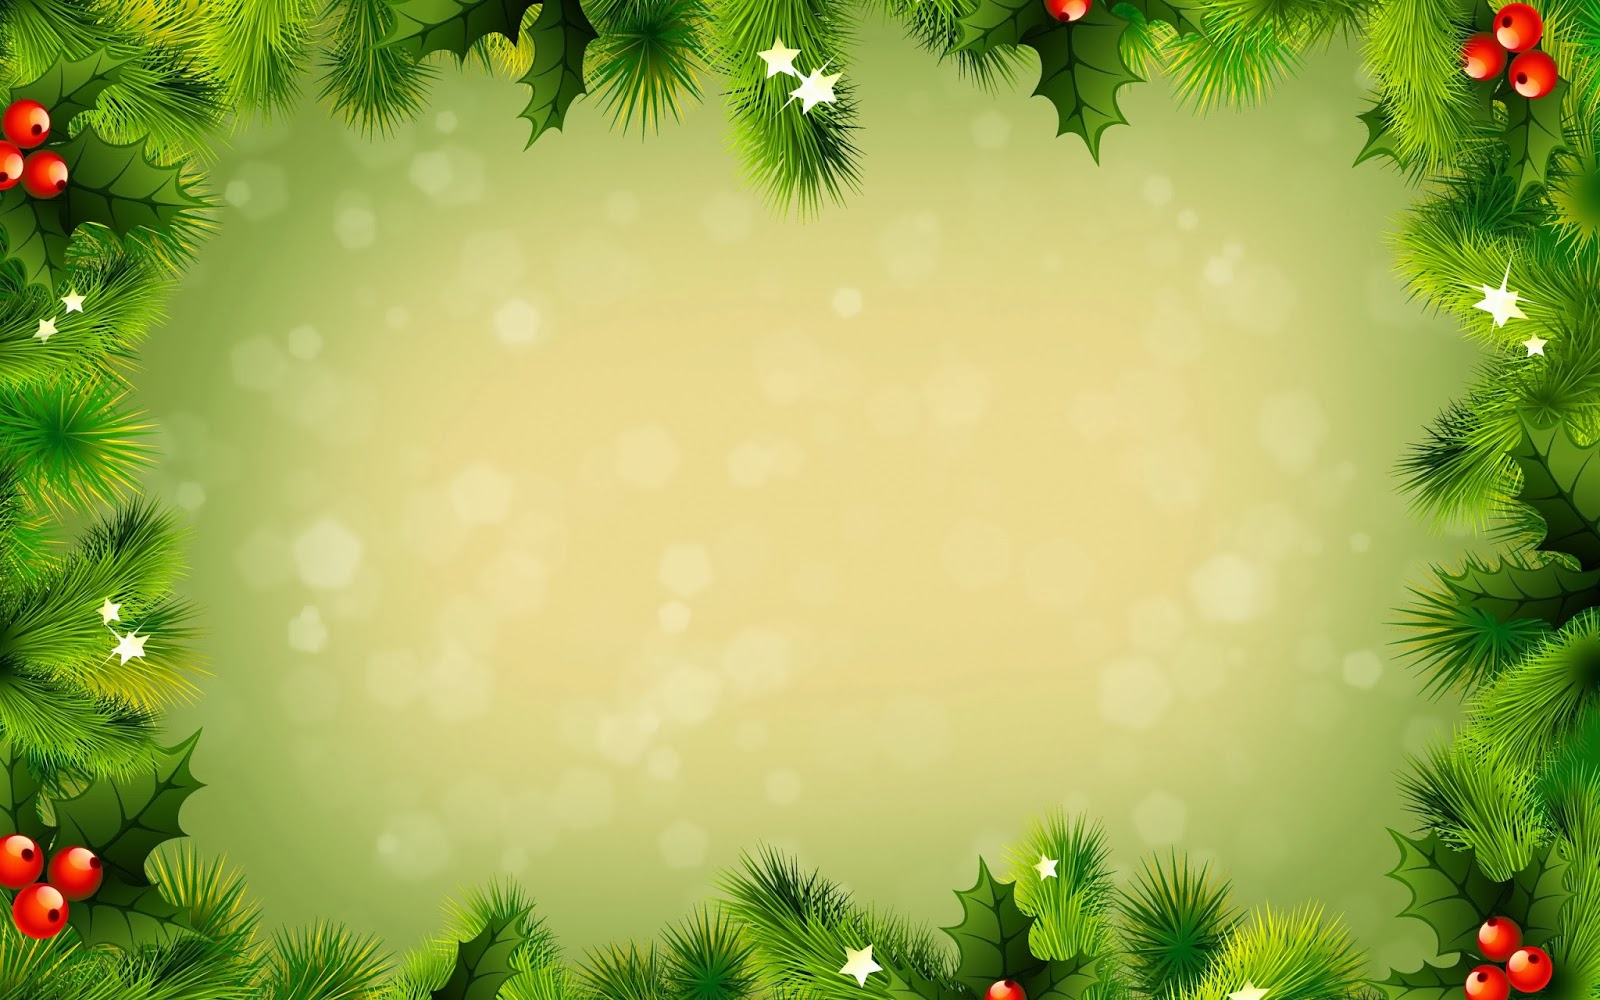 Green Christmas Background Hd Wallpaper   Hd Wallpapers Blog